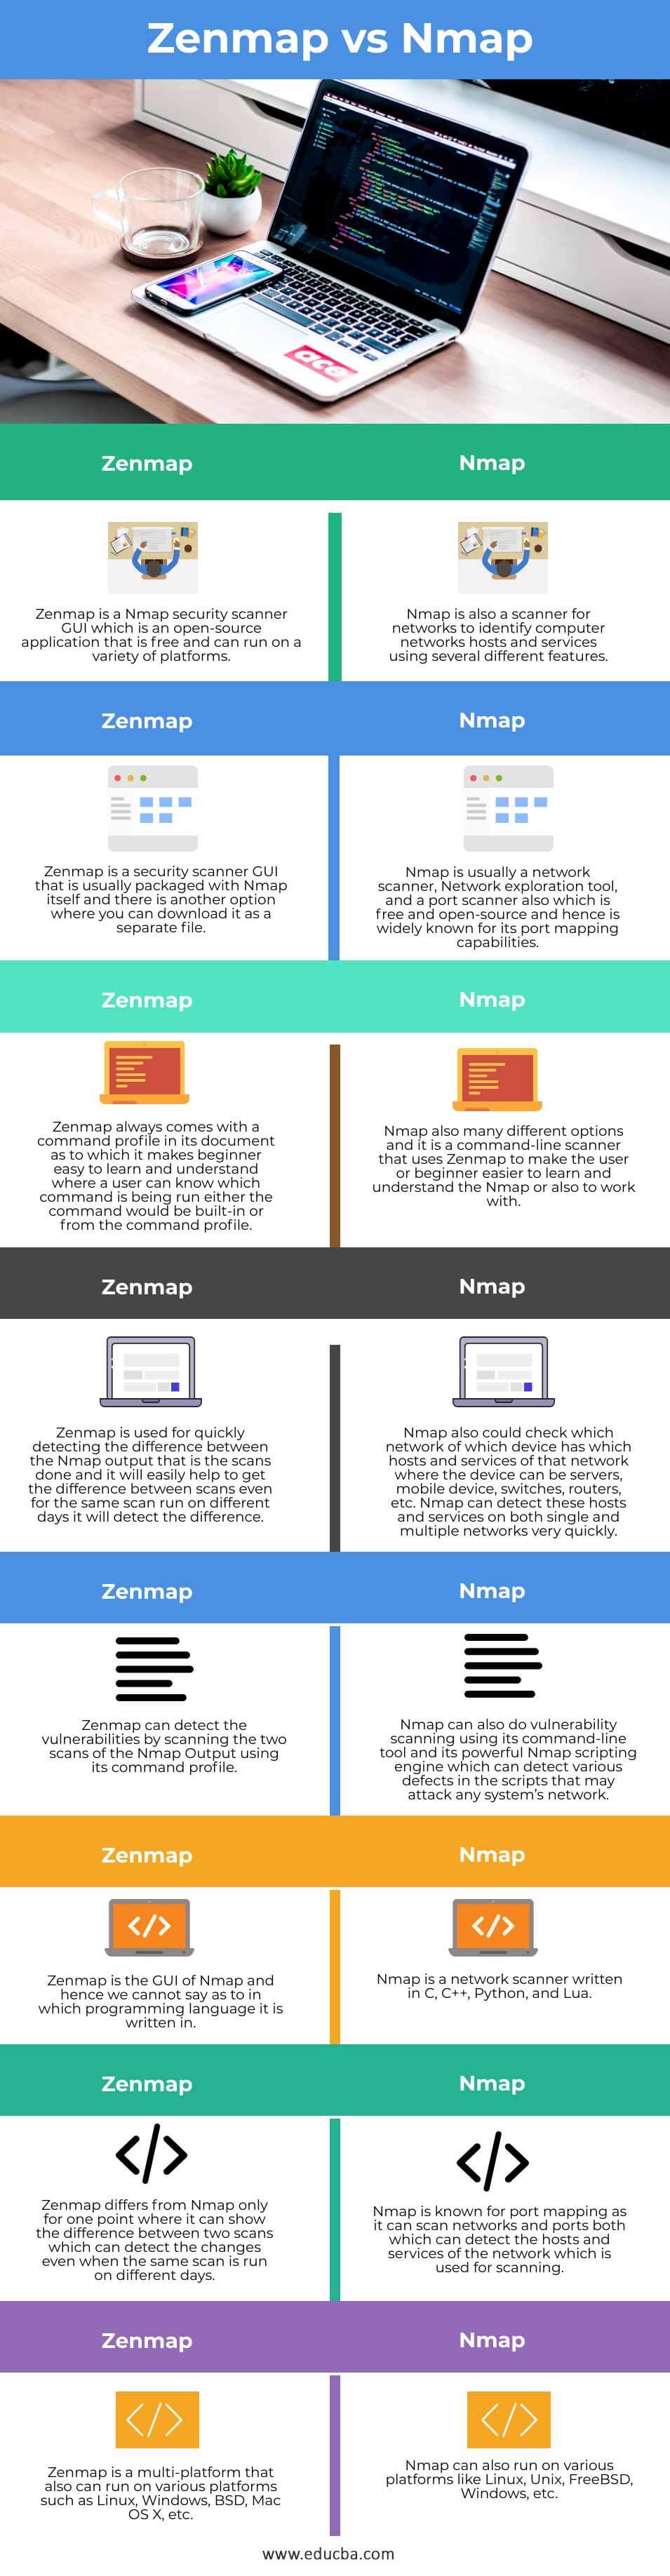 Zenmap-vs-Nmap-info